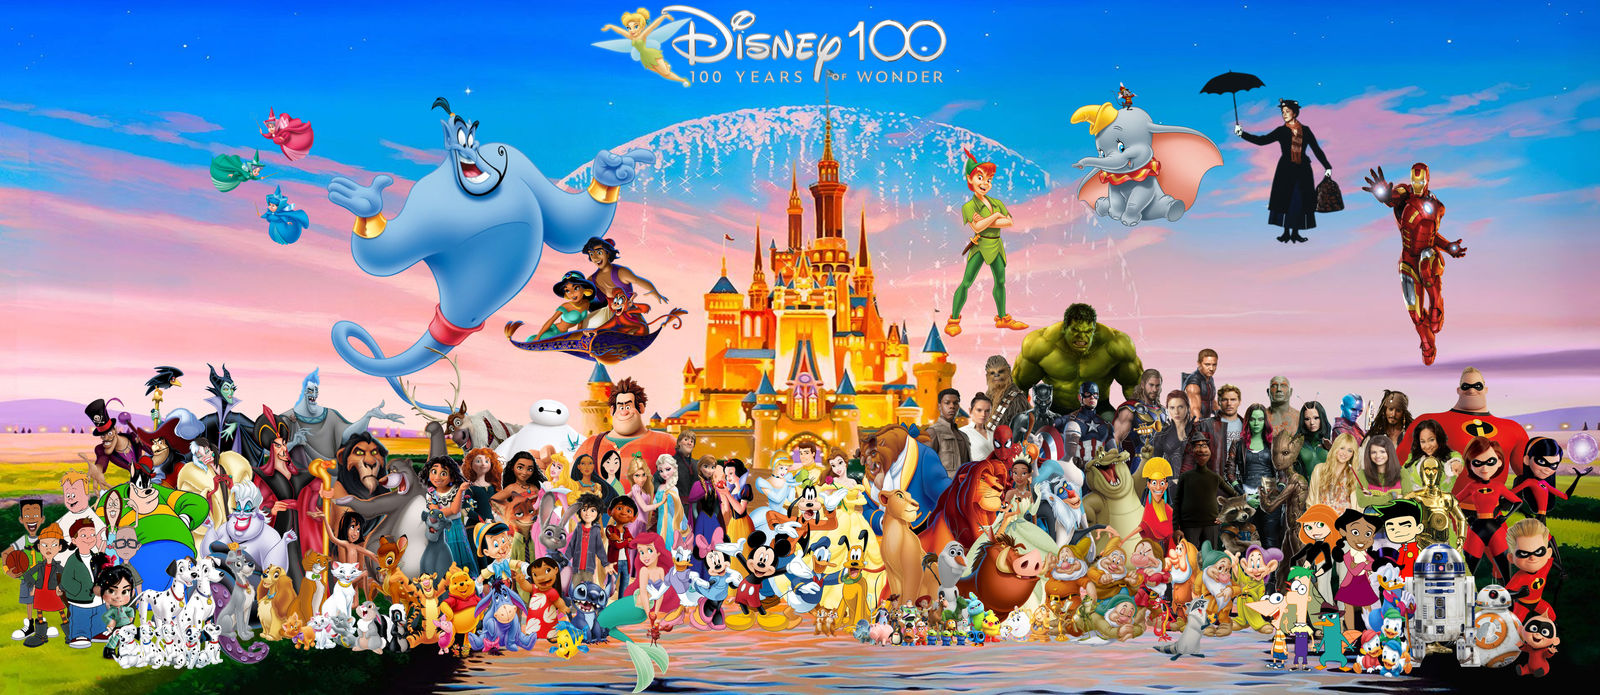 Disney 100th Anniversary Celebration by aaronhardy523 on DeviantArt